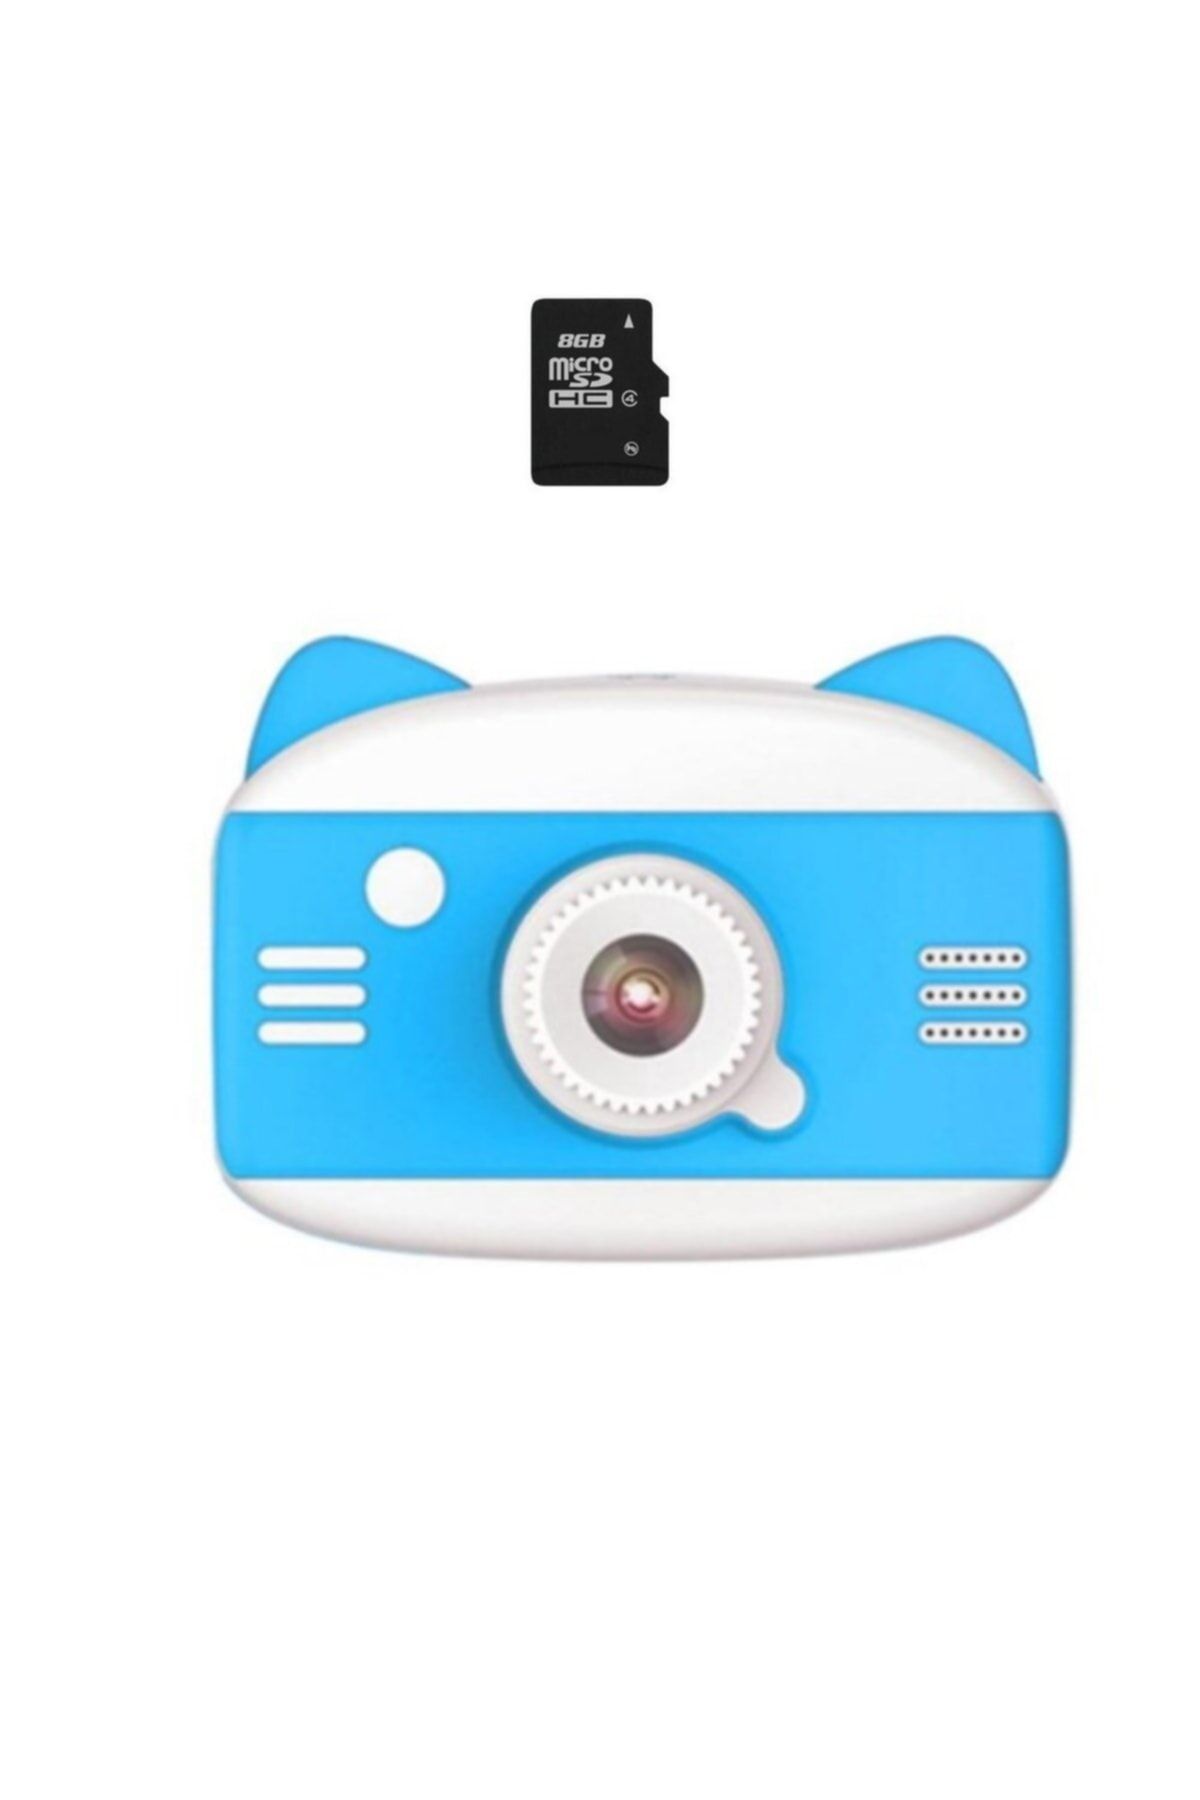 AteşTech Çocuk Fotoğraf Makinesi X900 Hd Selfie Kamera + 8gb Hafıza Kartı